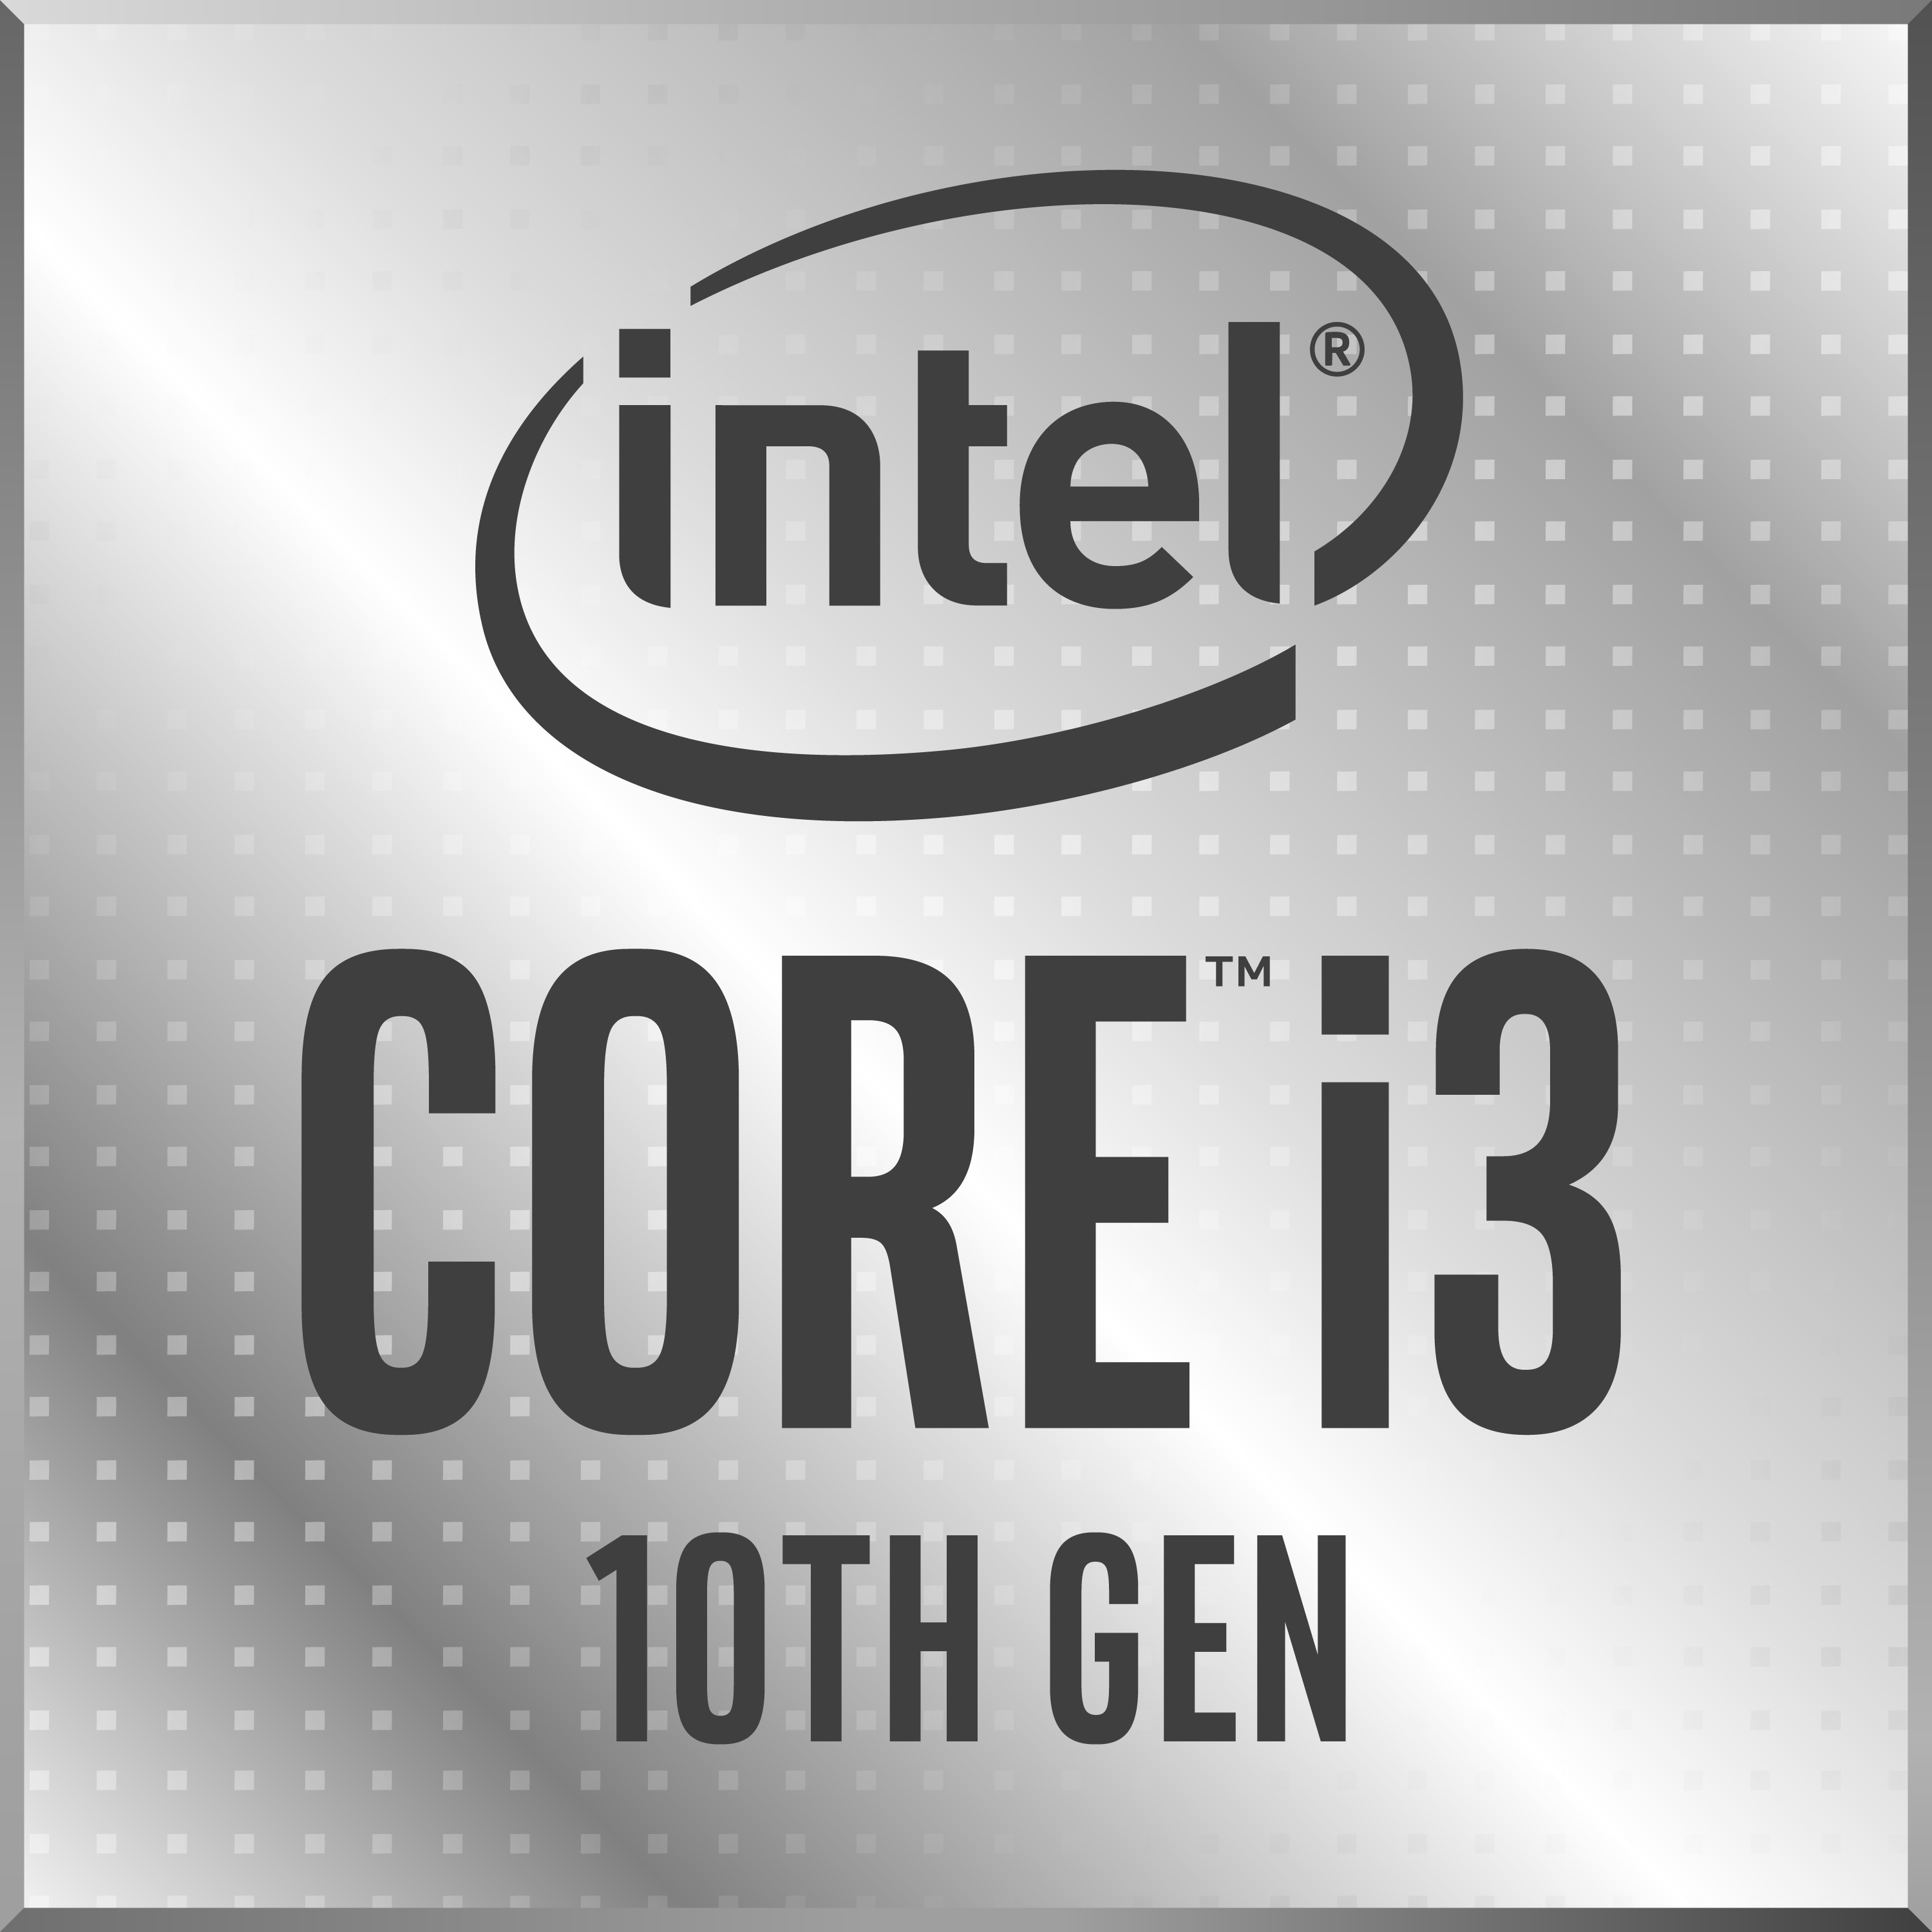 Intel Core i3-10100F Processor - Benchmarks and Specs